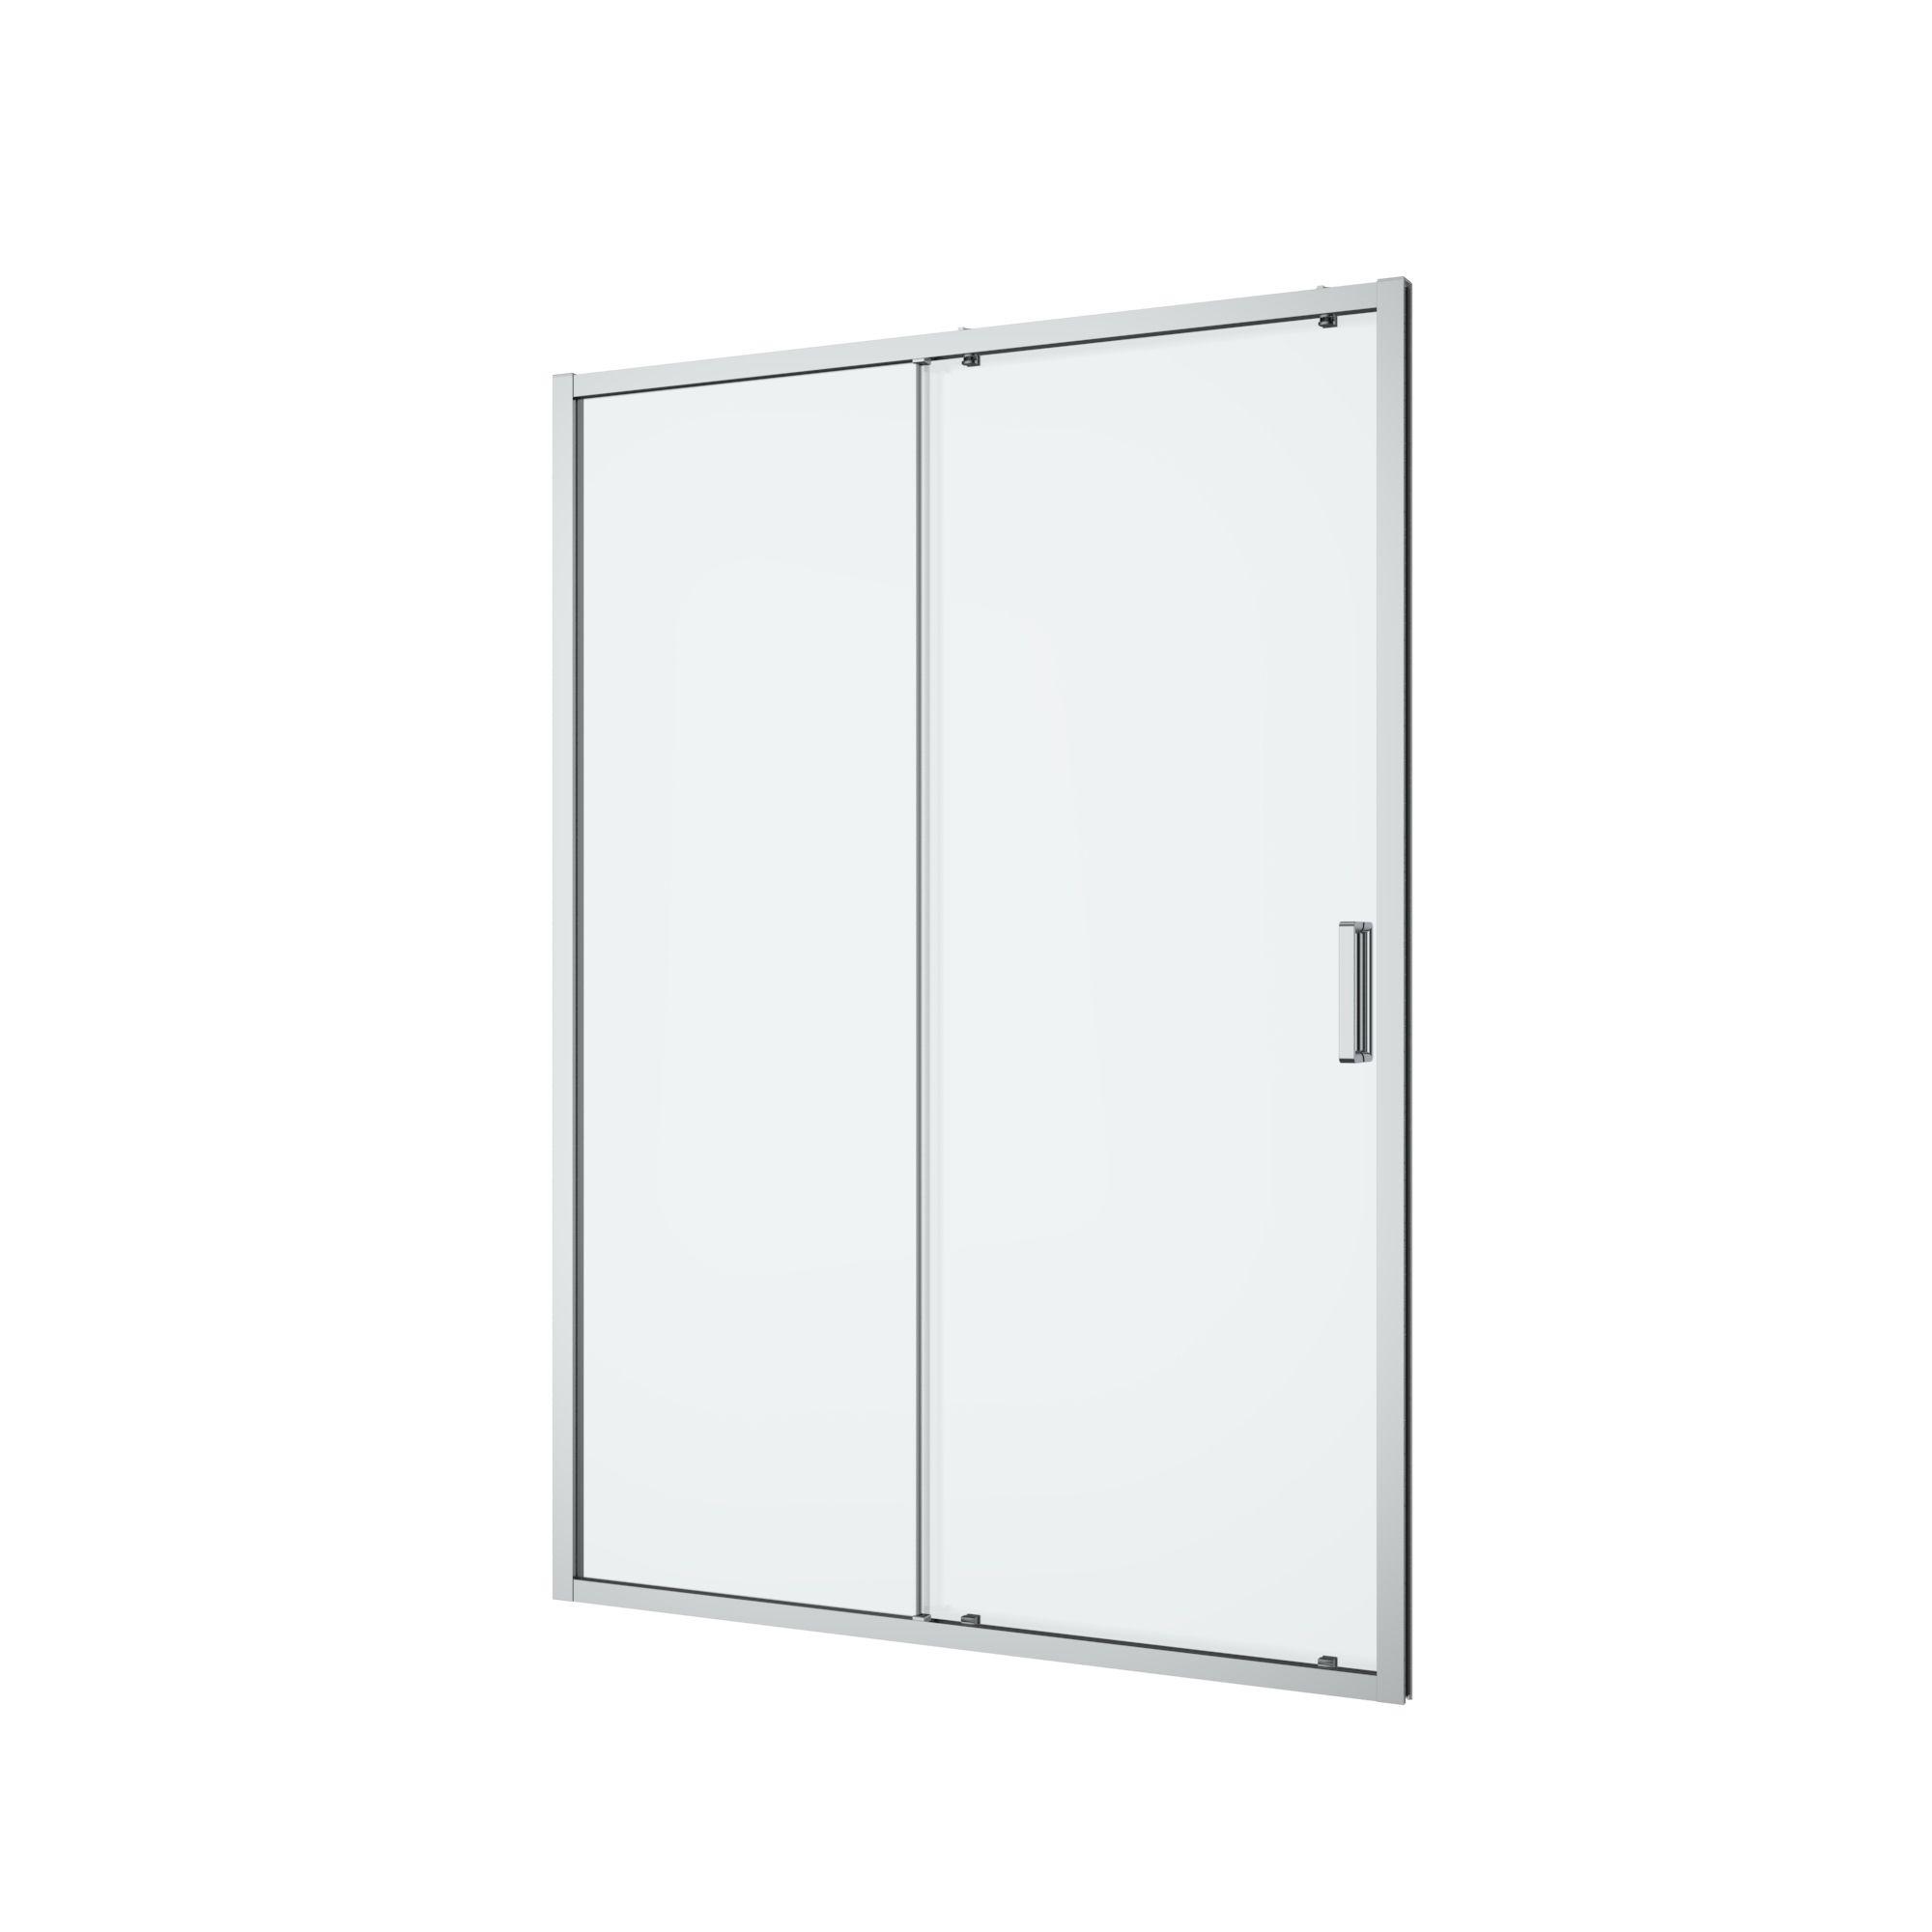 GoodHome Ledava Minimal frame Chrome effect Clear glass Sliding Shower Door (H)195cm (W)140cm